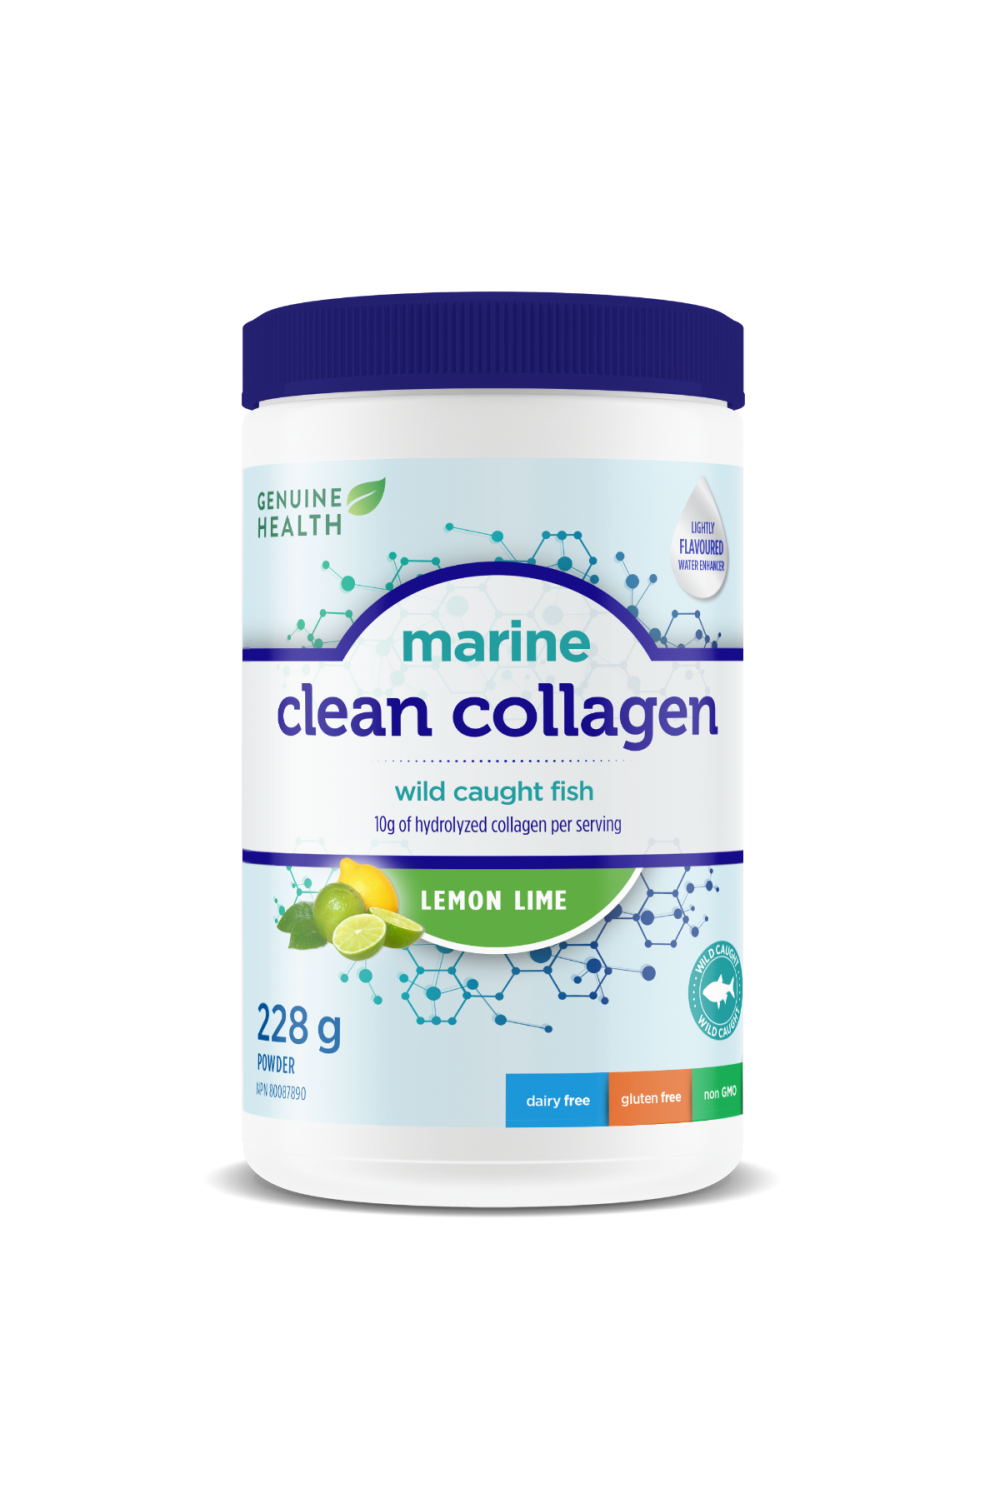 Genuine Health Clean Collagen (Marine) - Lemon Lime Flavour 228g